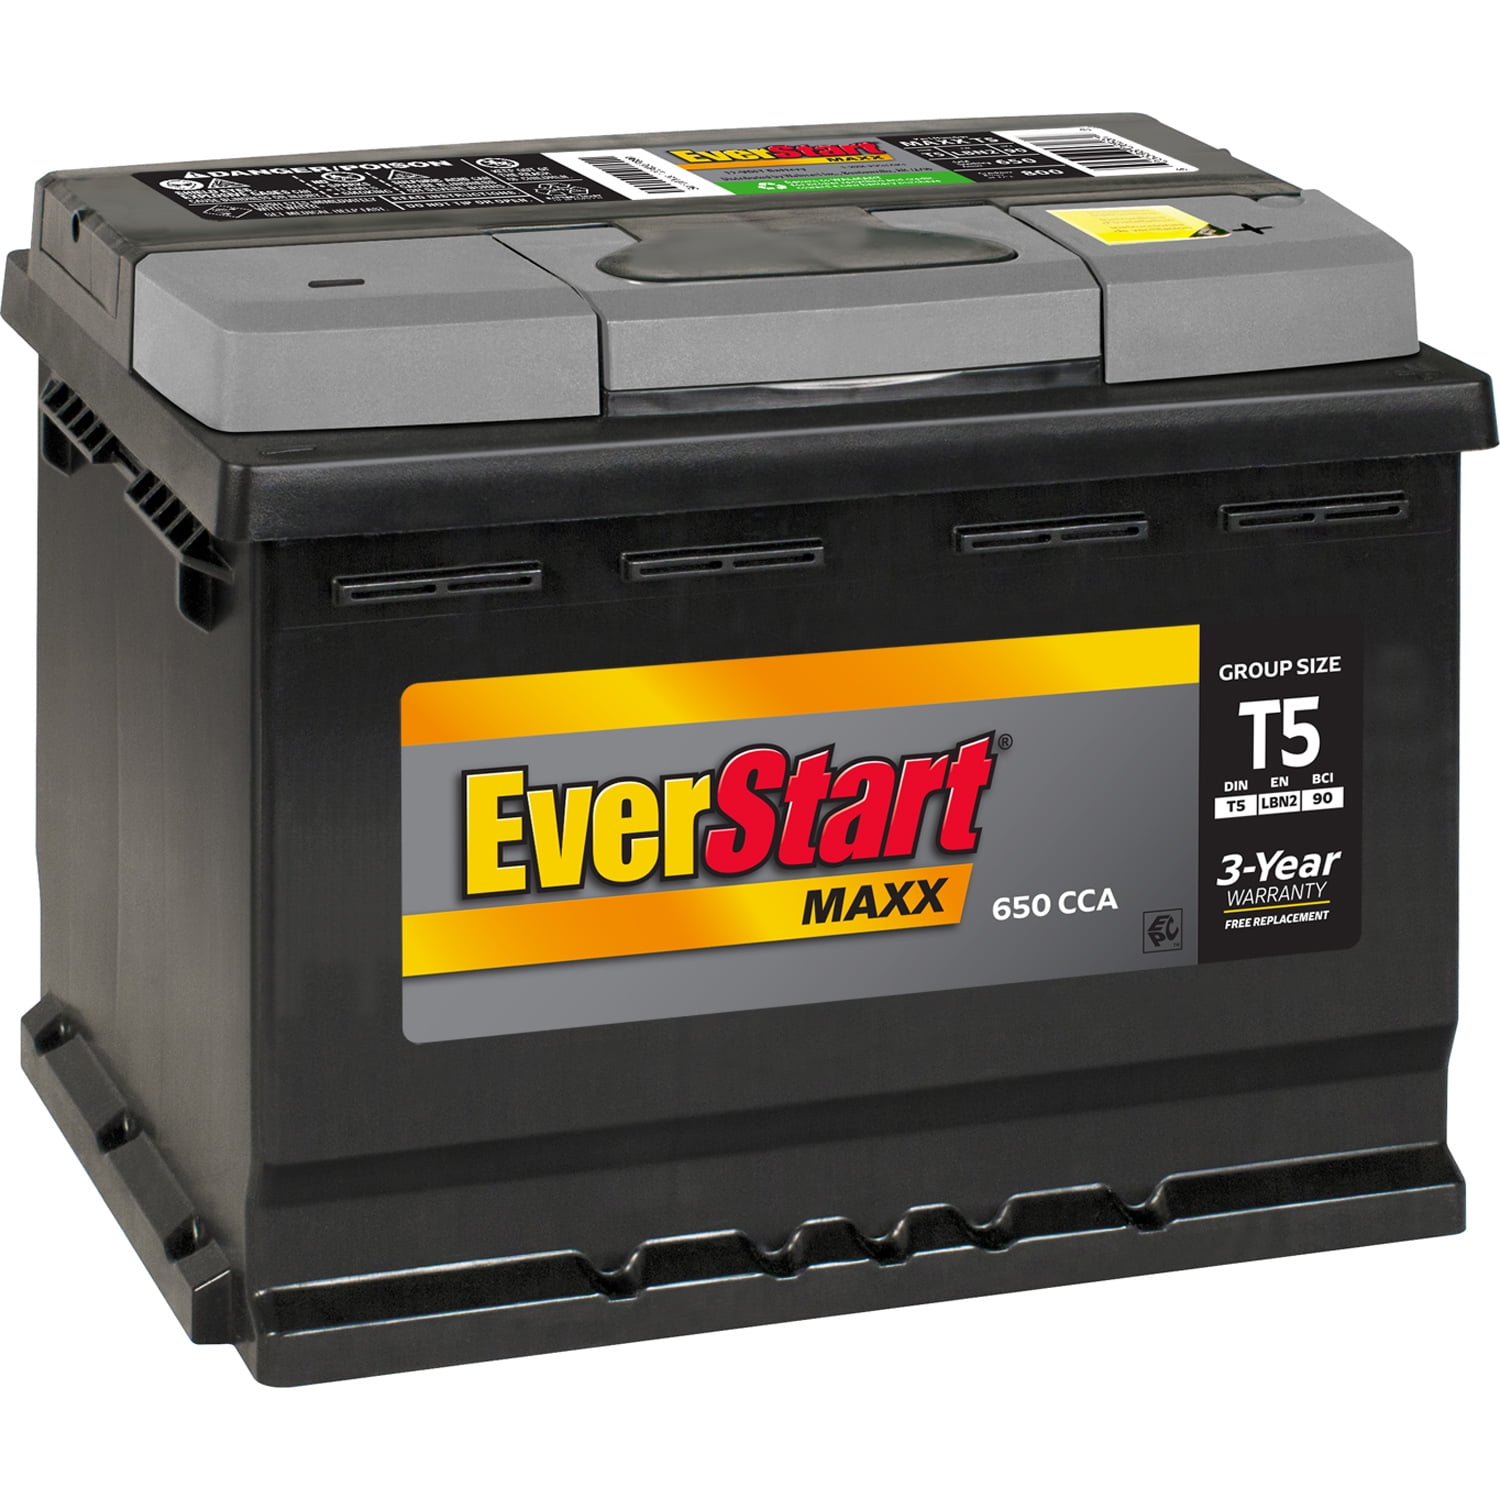 EverStart Maxx Lead Acid Automotive Battery, Group Size T5 (12 Volt/650 CCA)